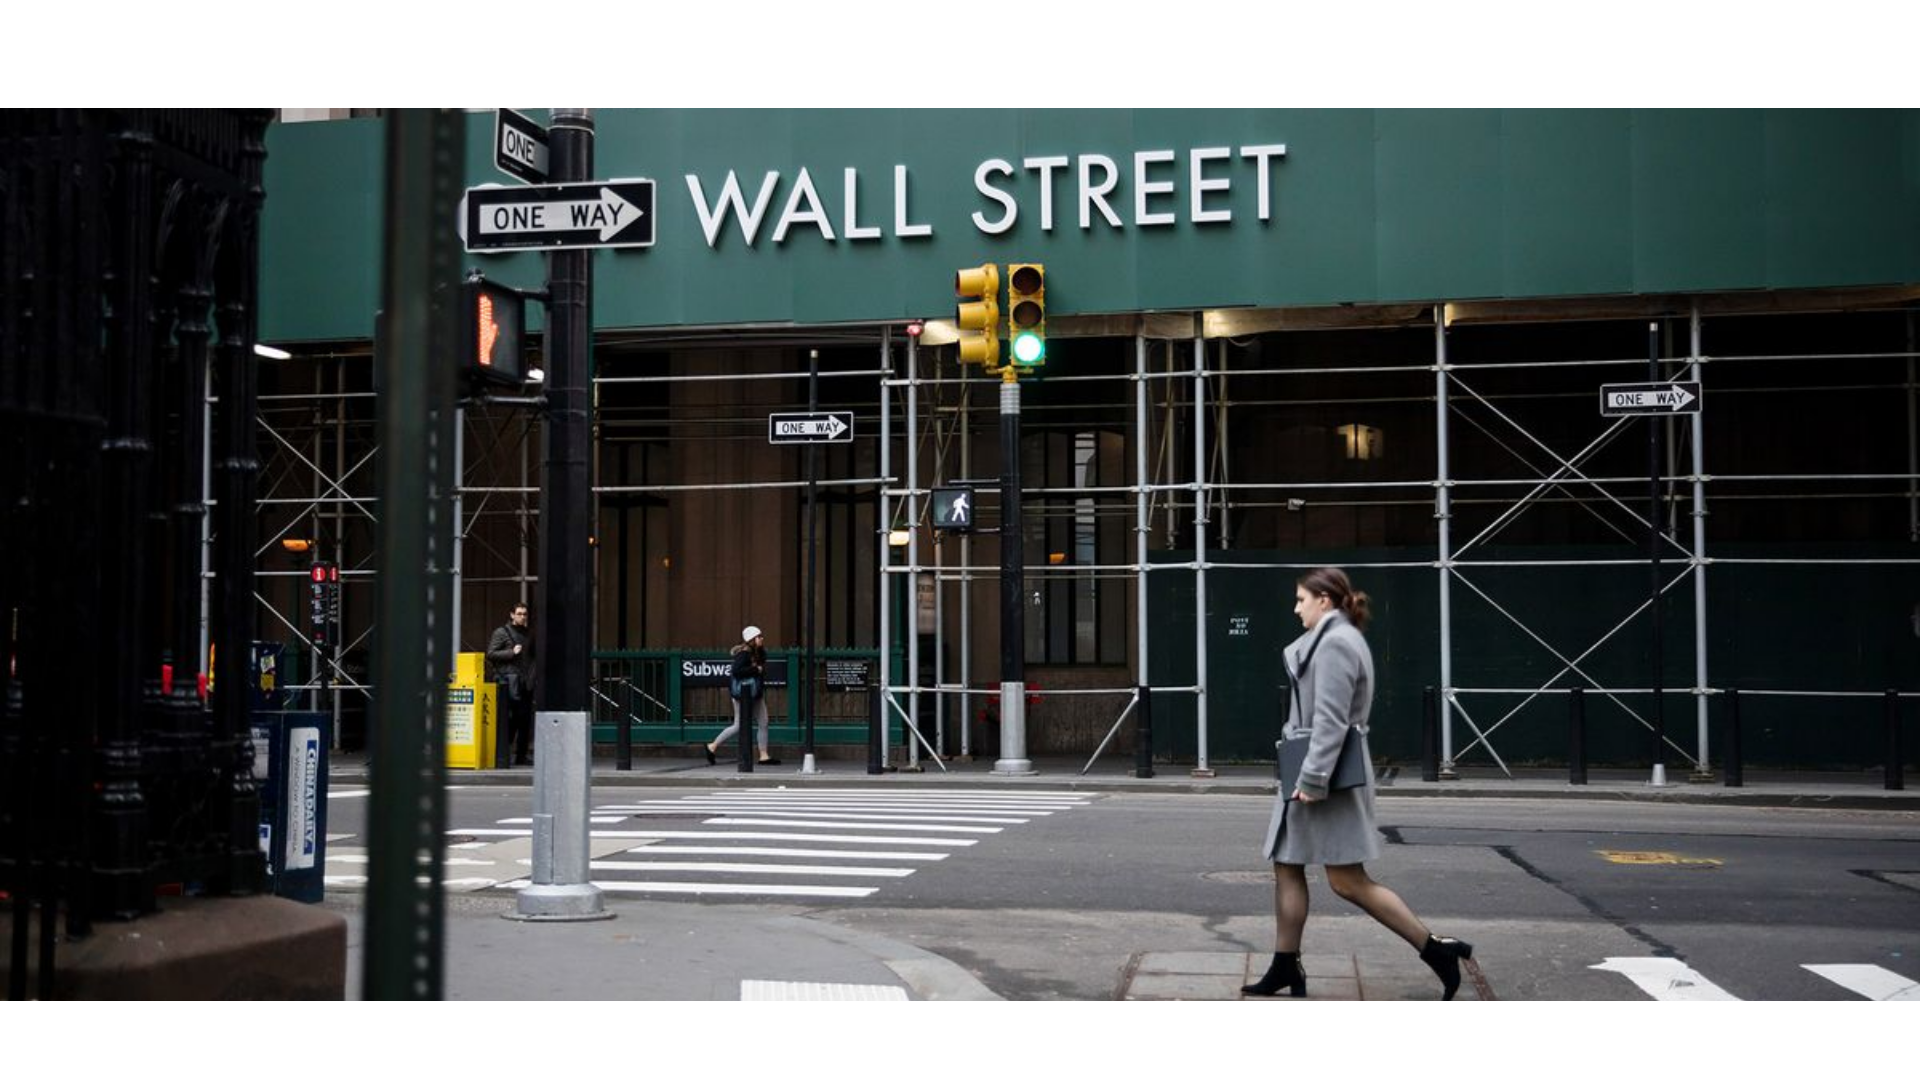 Wall Street yazan bir binanın görseli.